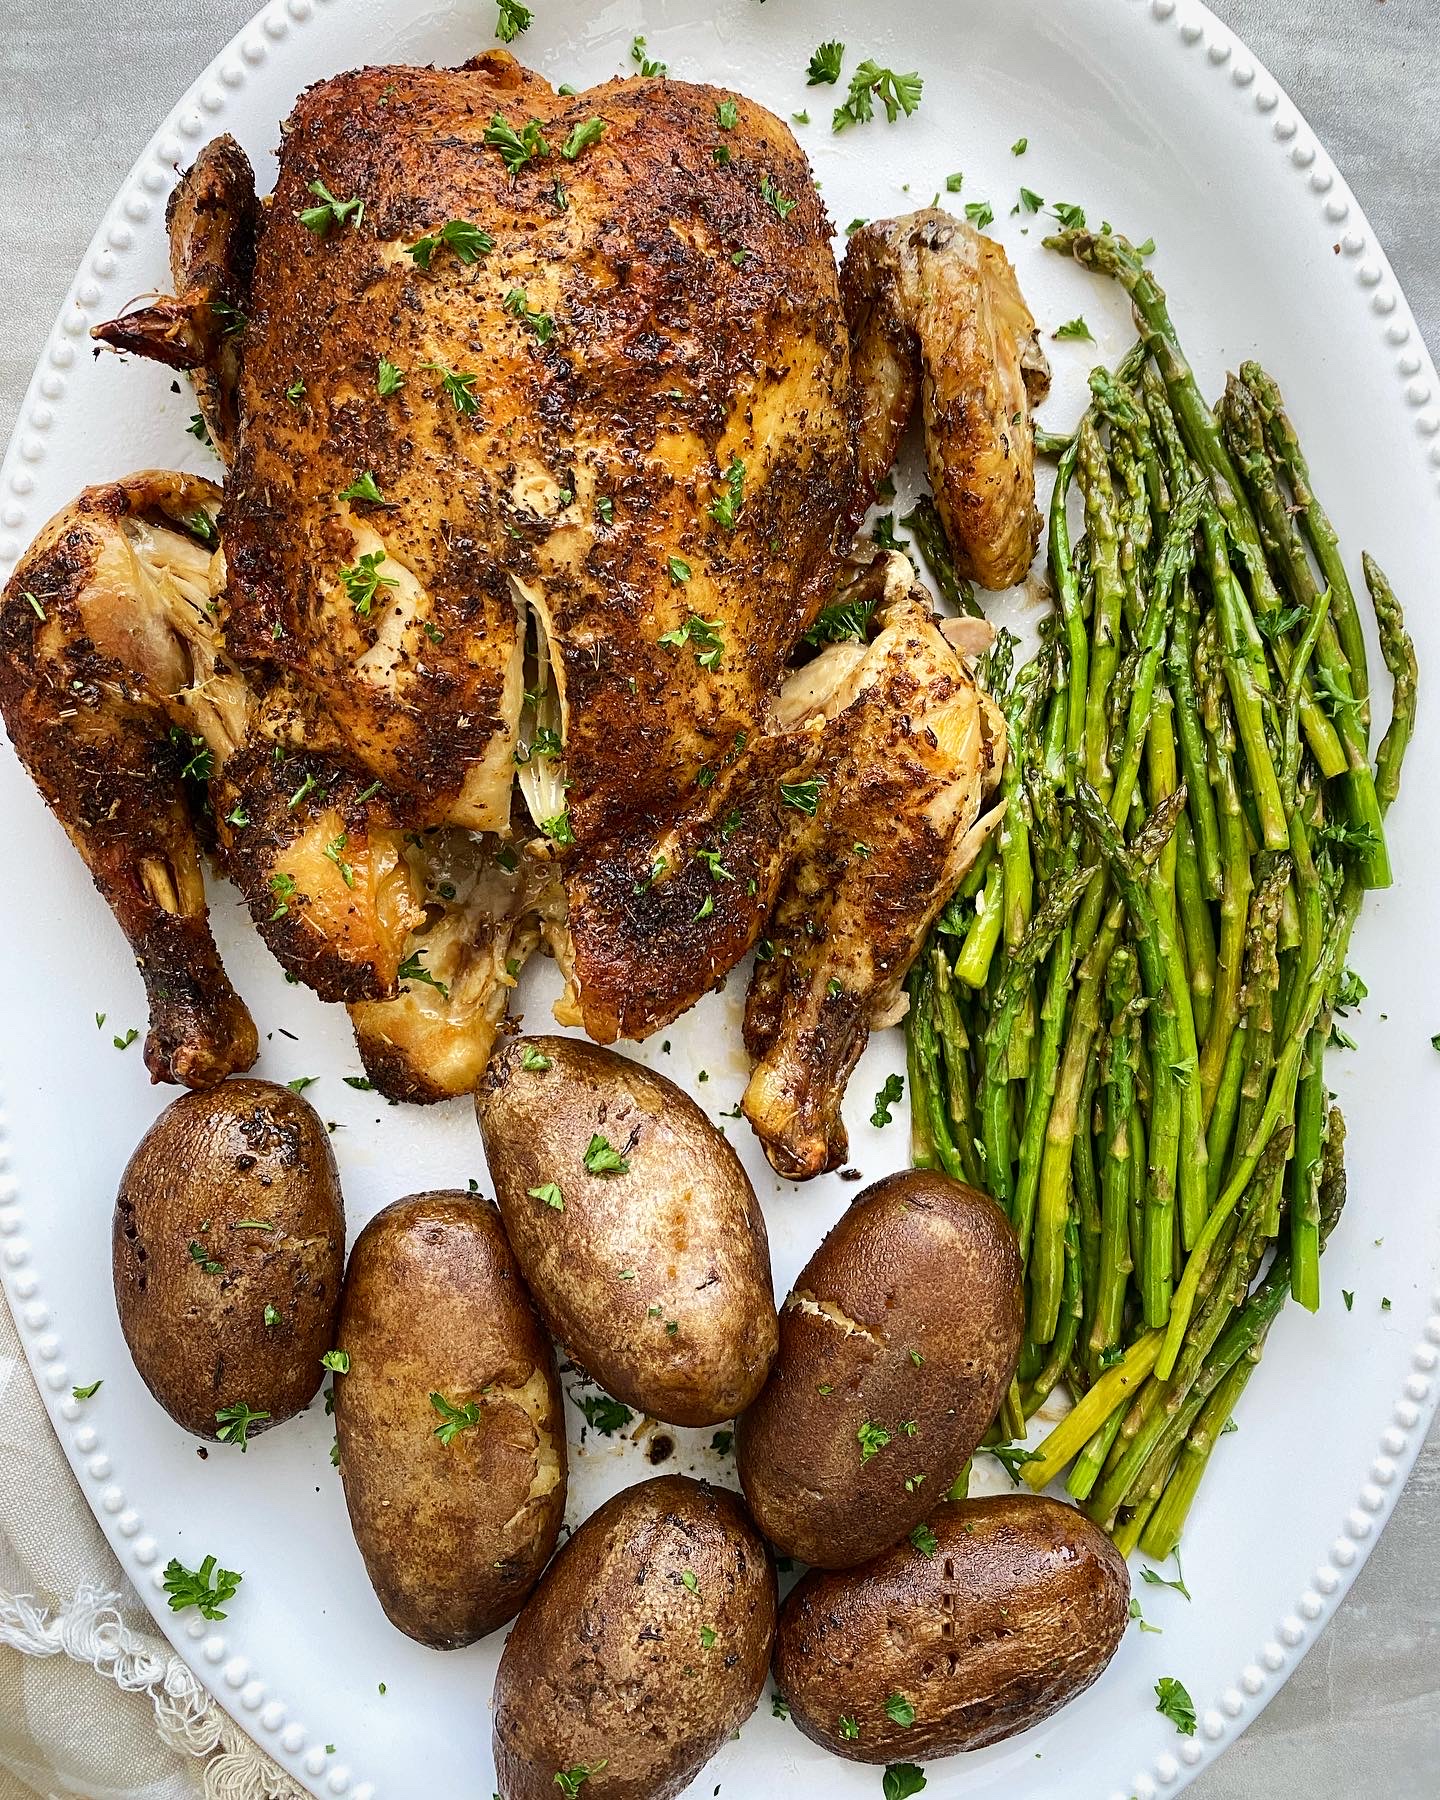 https://fitslowcookerqueen.com/wp-content/uploads/2019/07/Crock-Pot-Whole-Chicken-Dinner-1.jpg